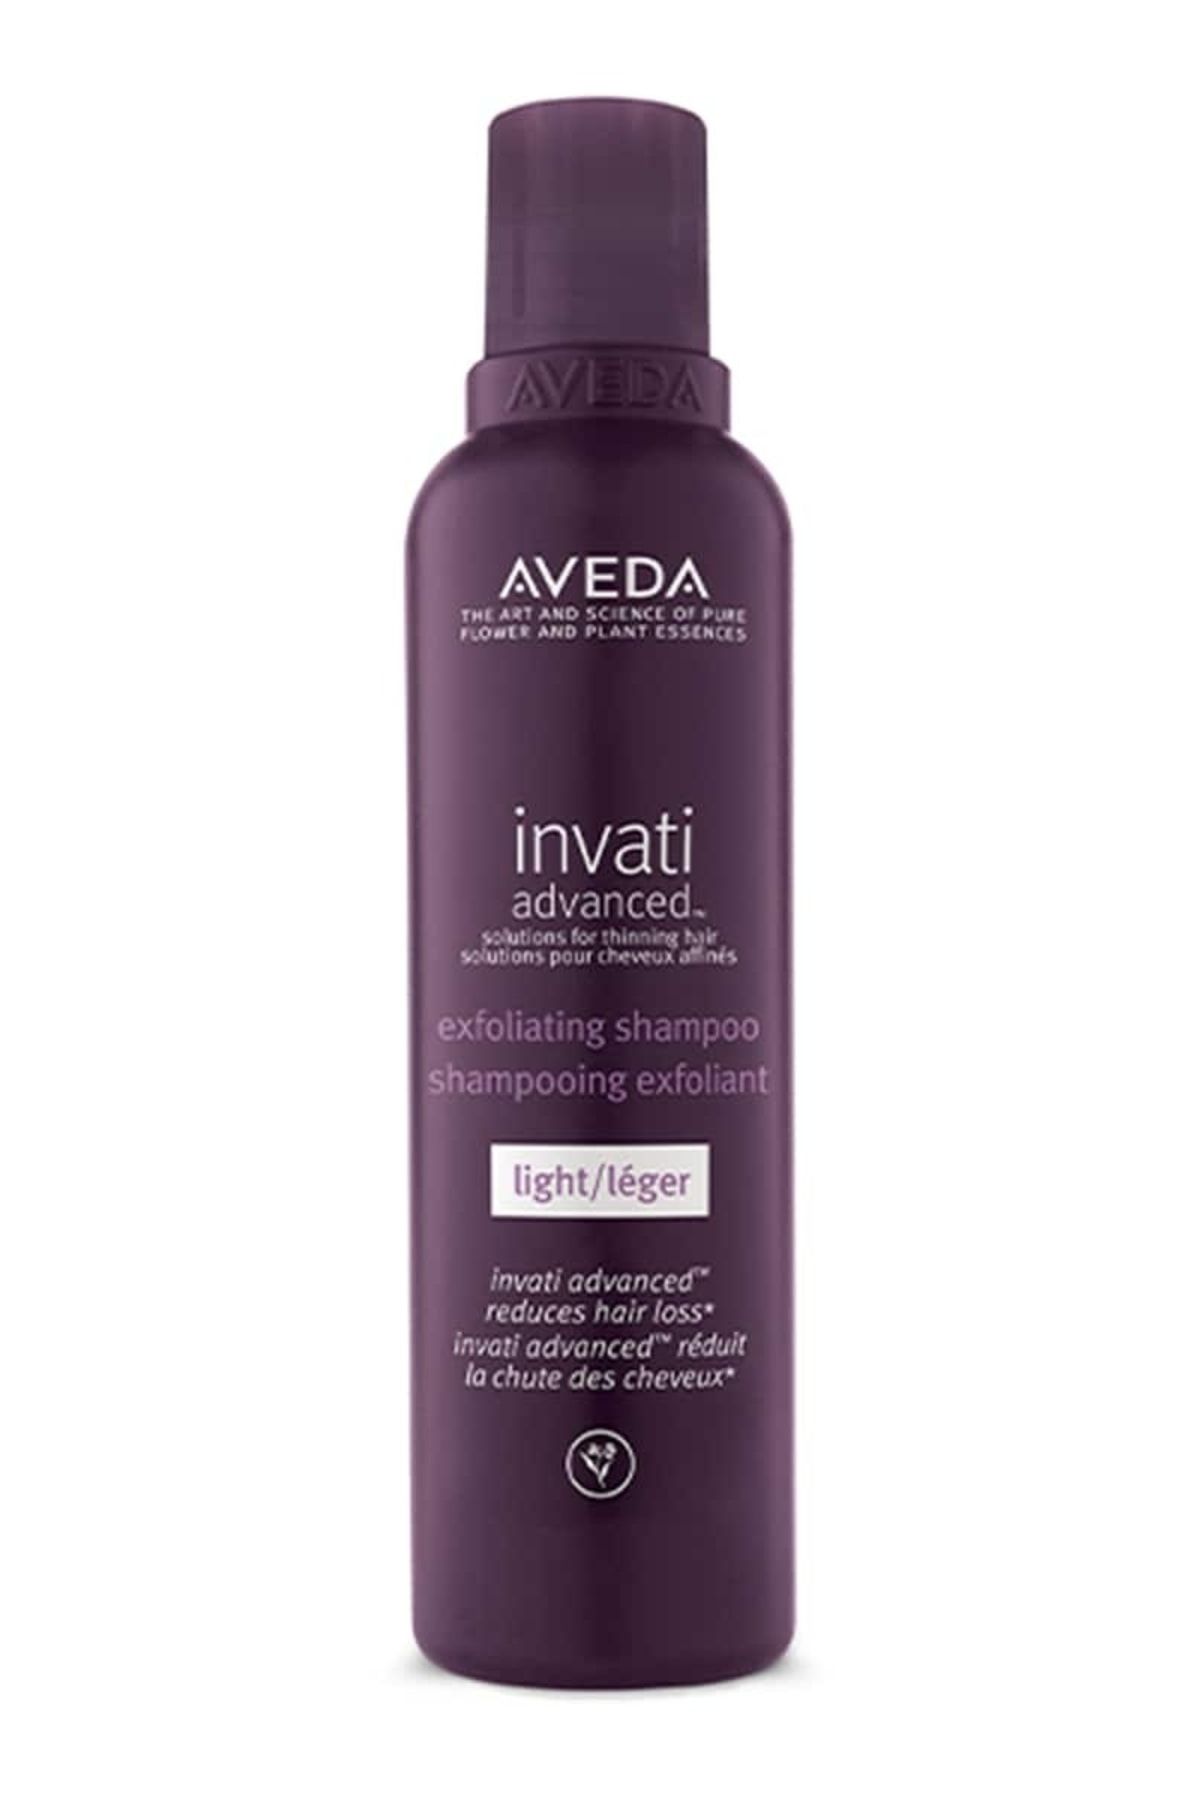 Aveda Invati Advanced Saç Dökülmesine Karşı Şampuan: Hafif Doku 200ml 018084016510